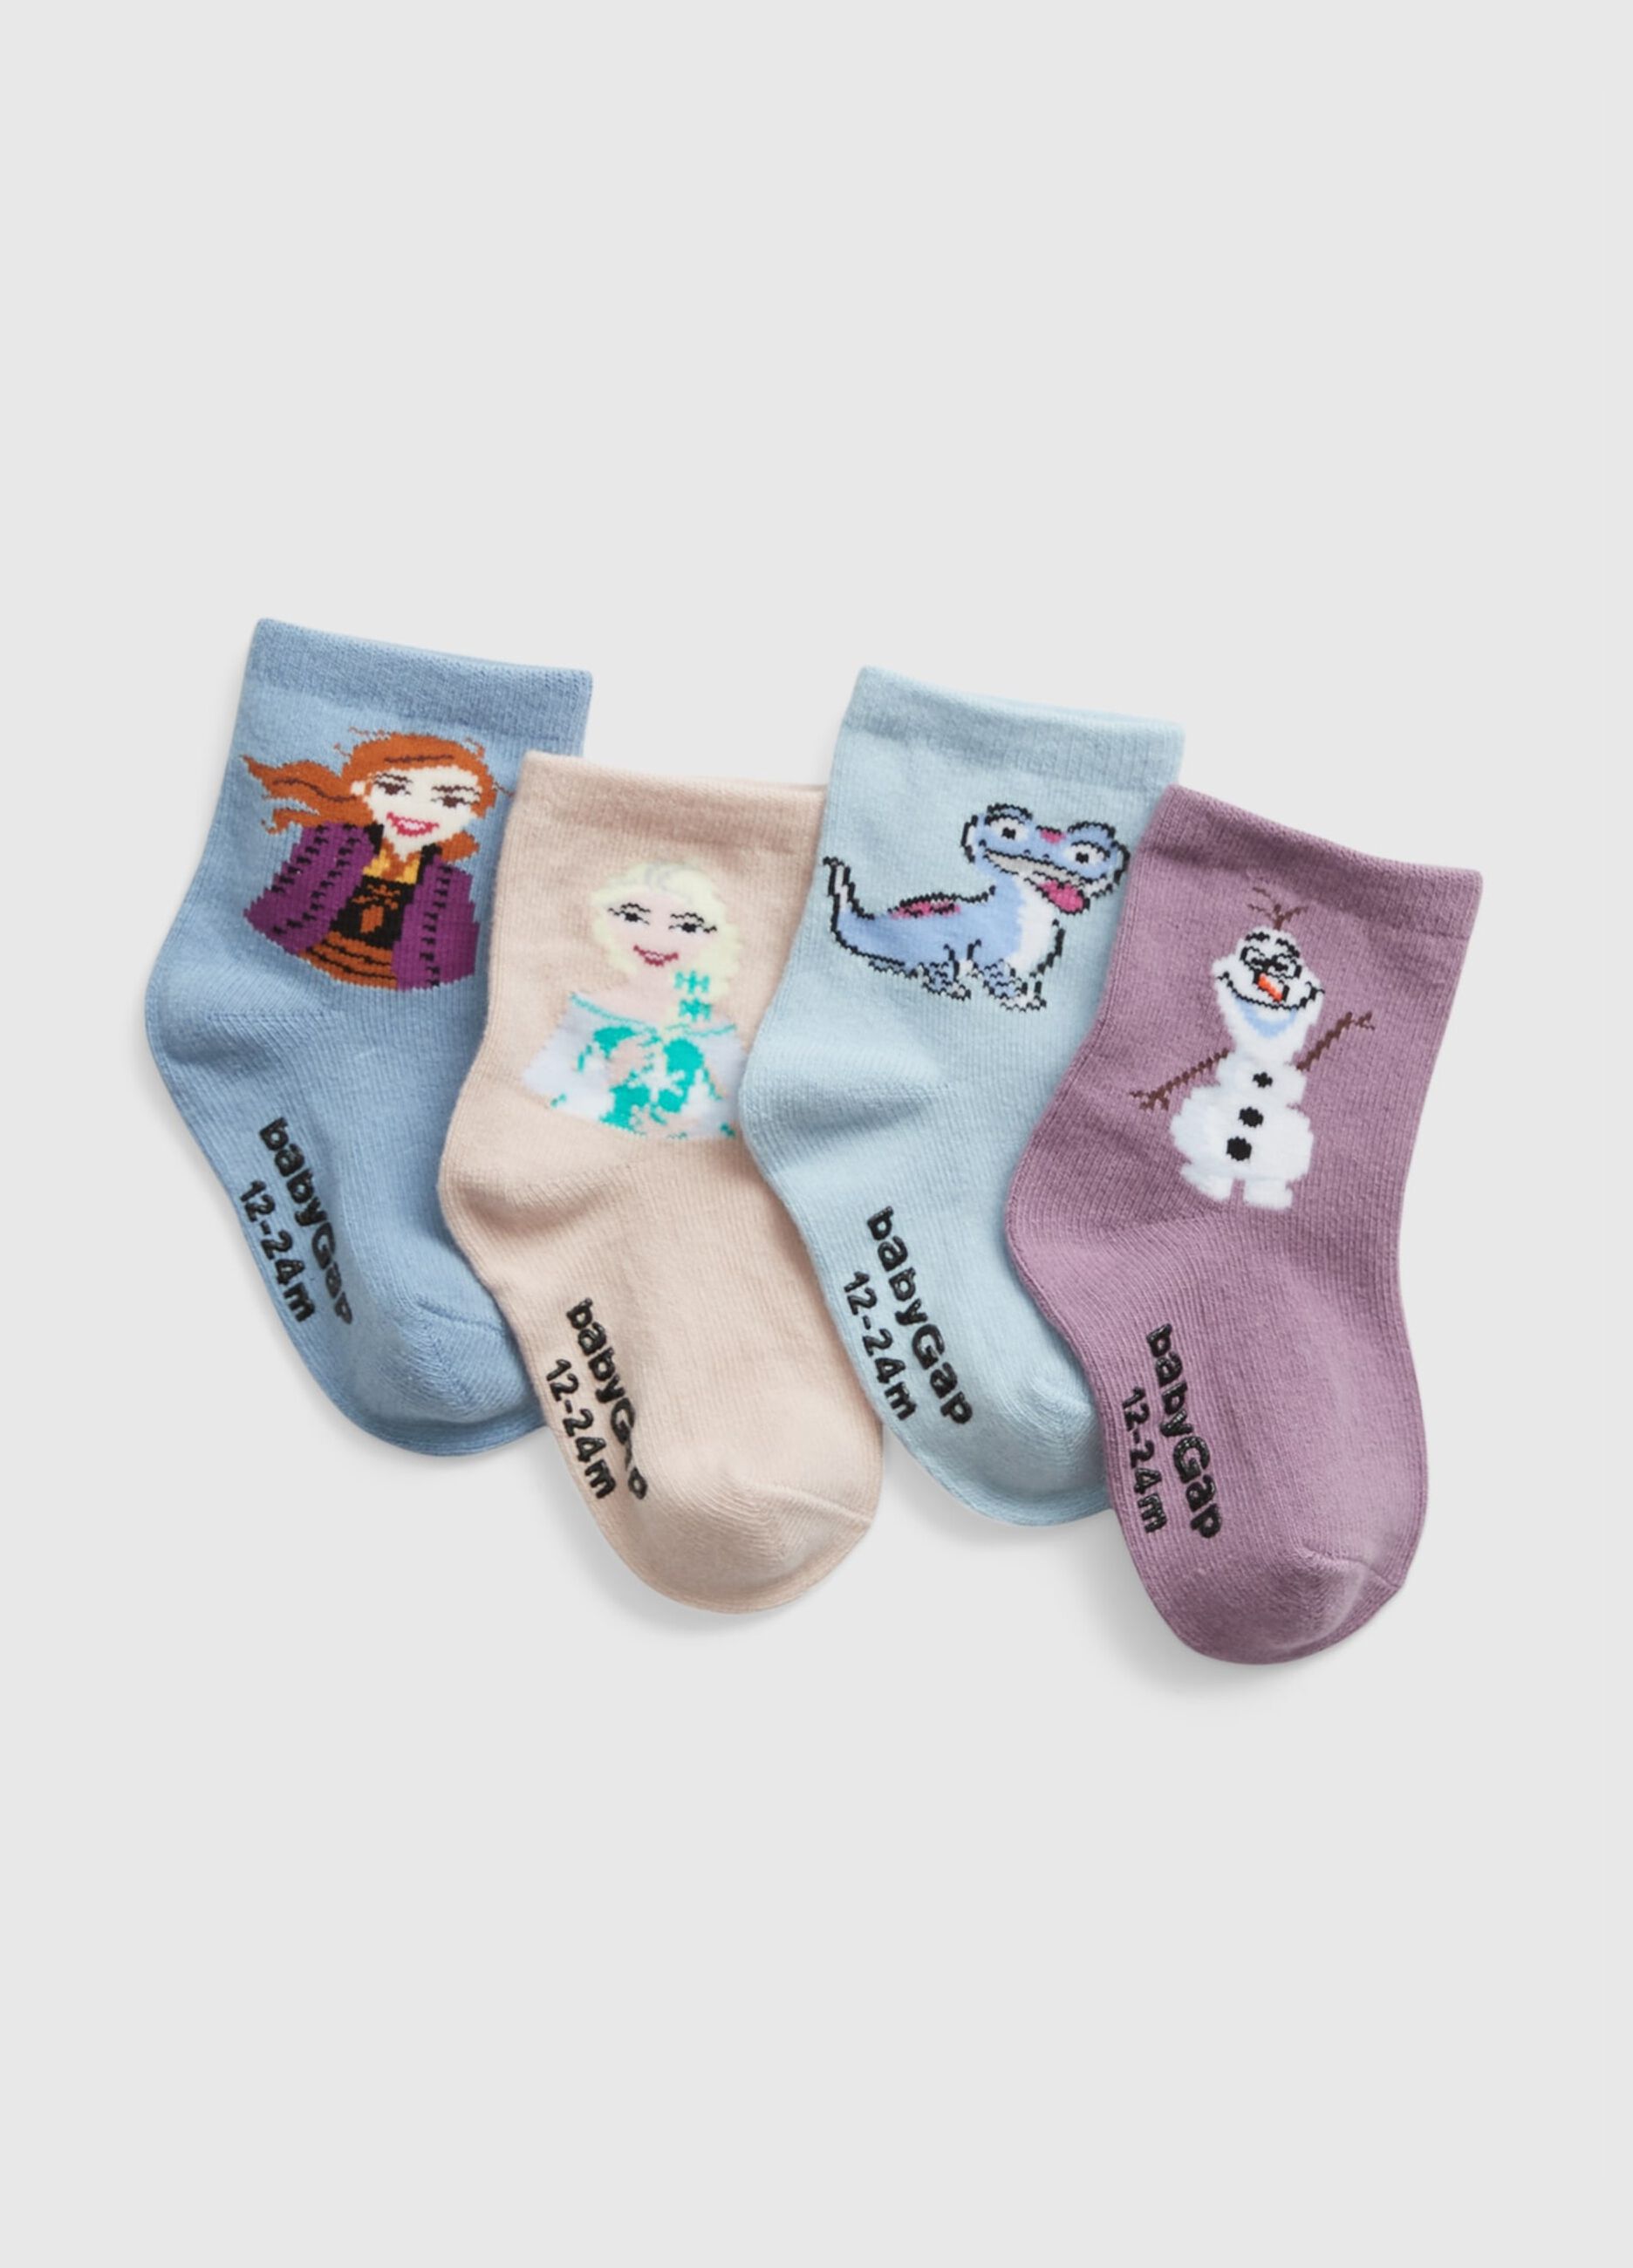 Set of four pairs of Disney Frozen socks